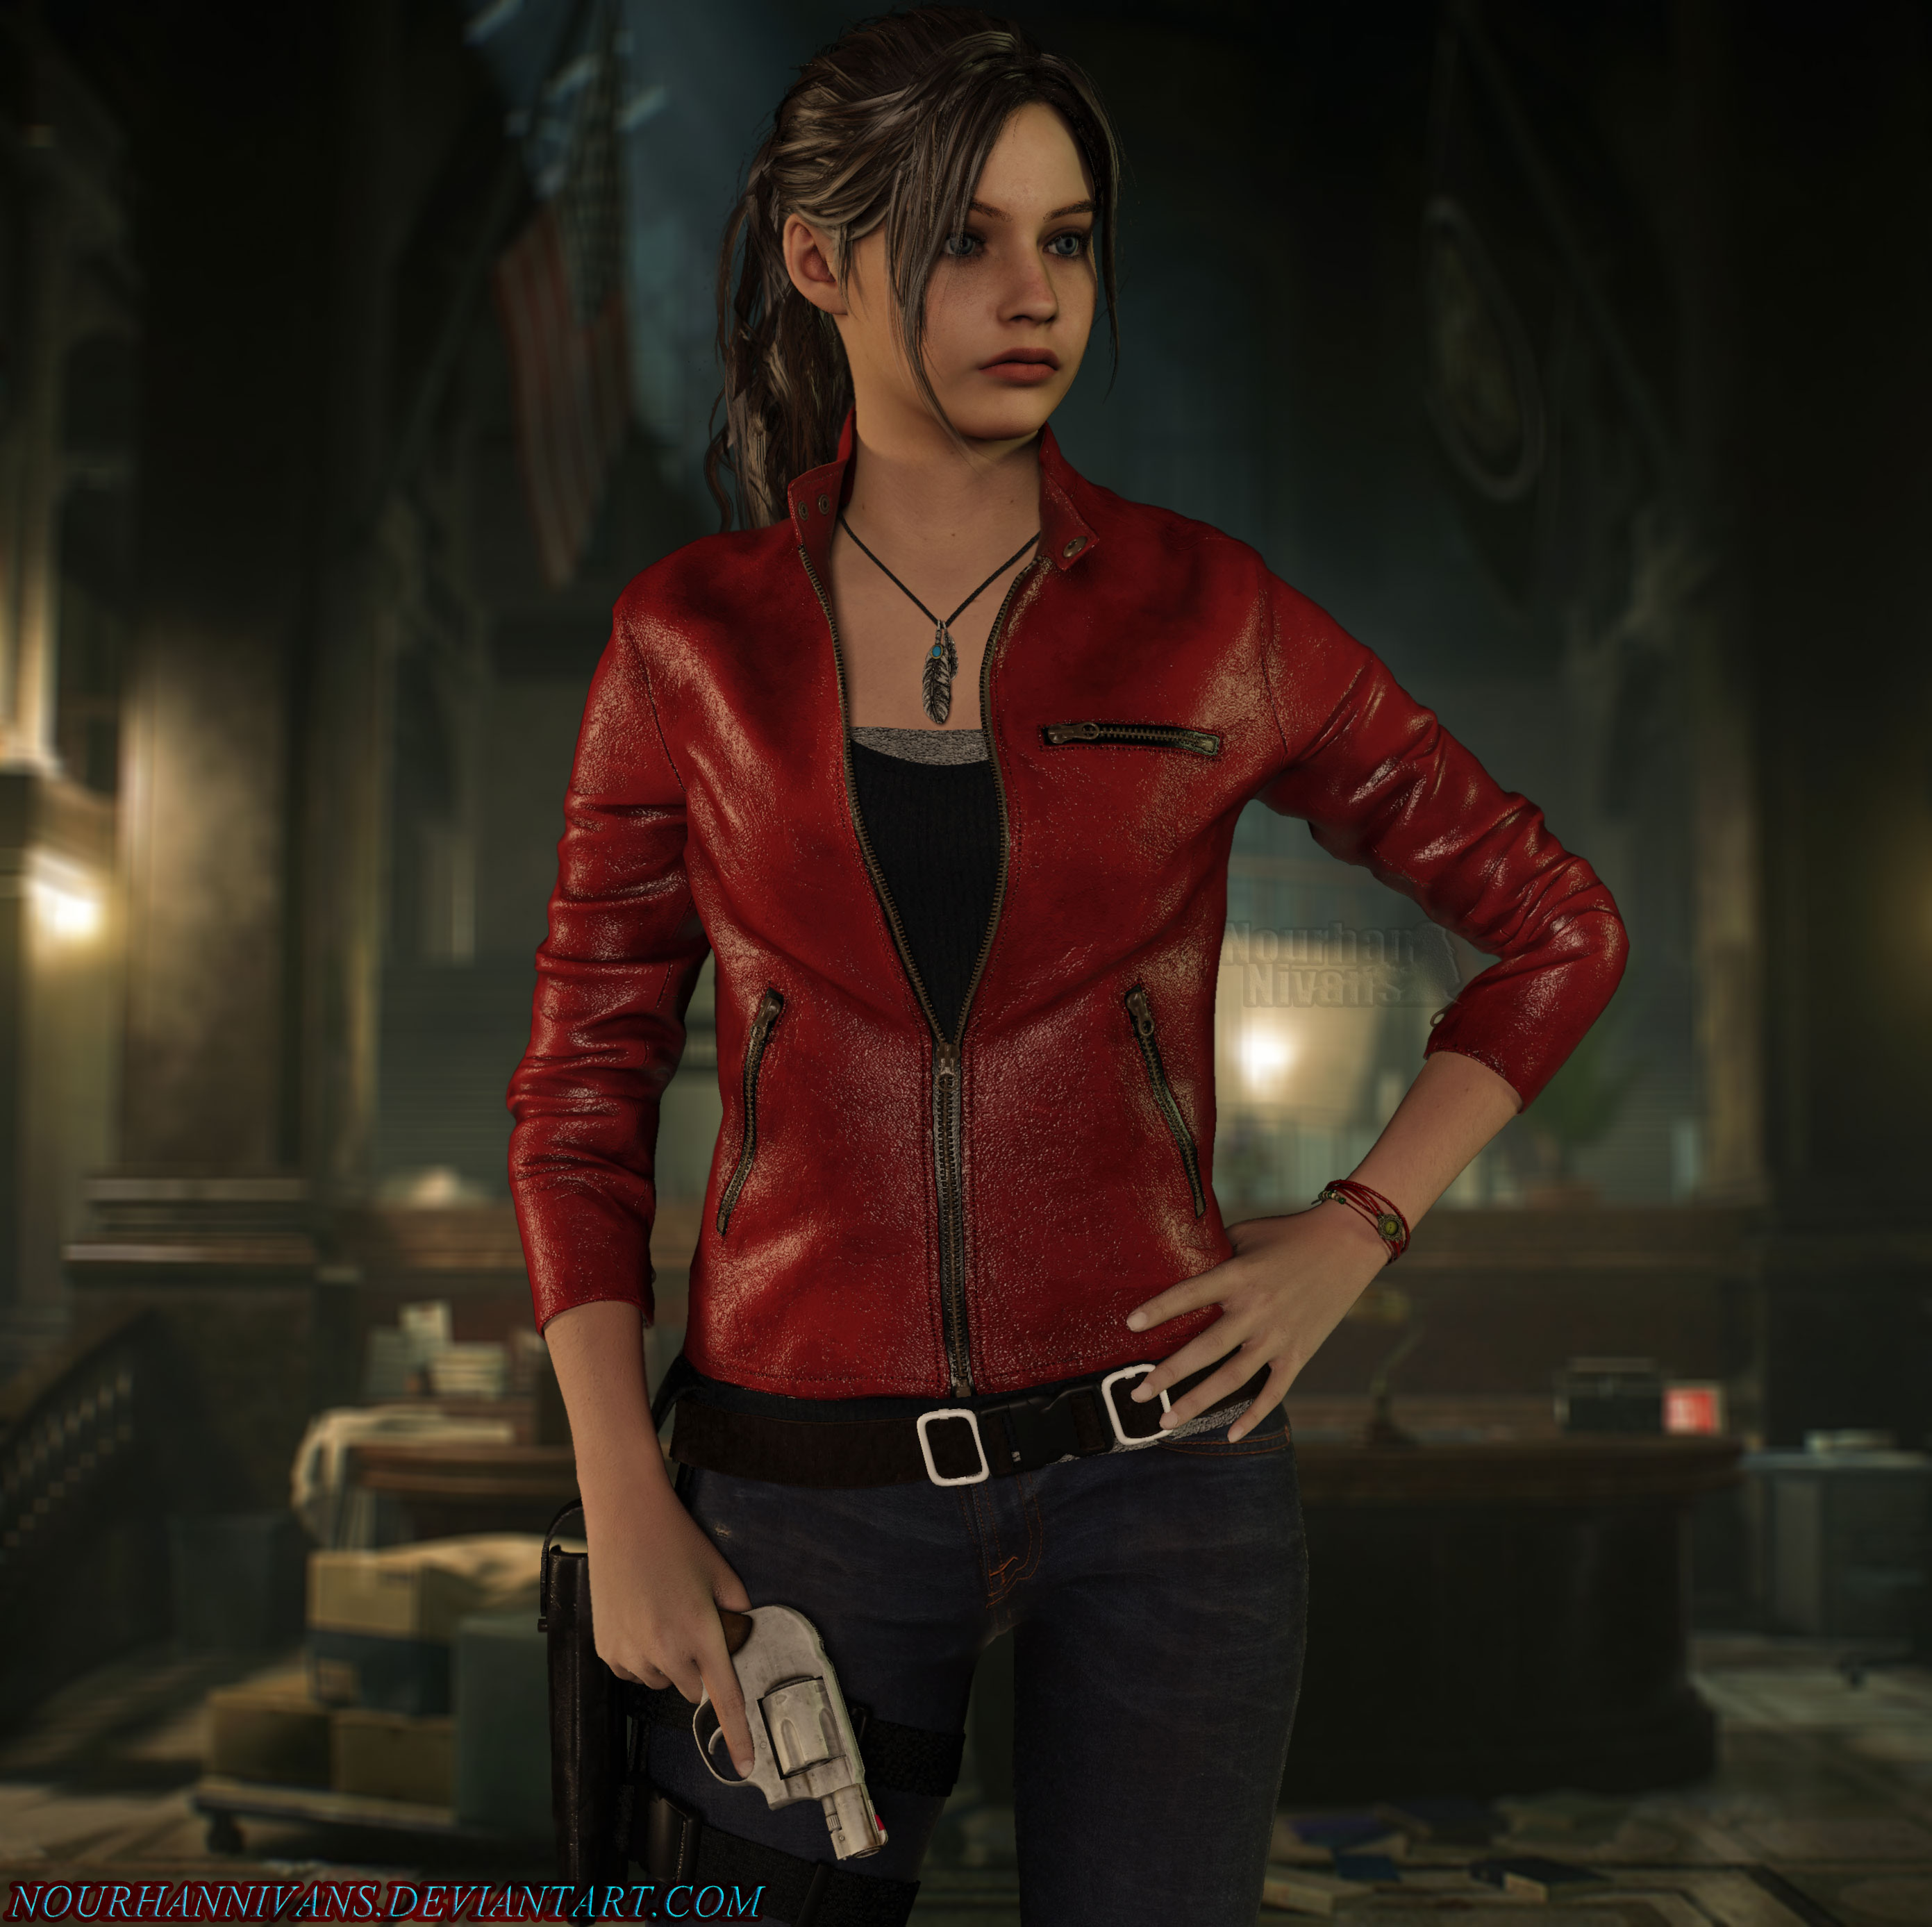 Byehazard Art — Claire Redfield as seen in Resident Evil 2 REmake